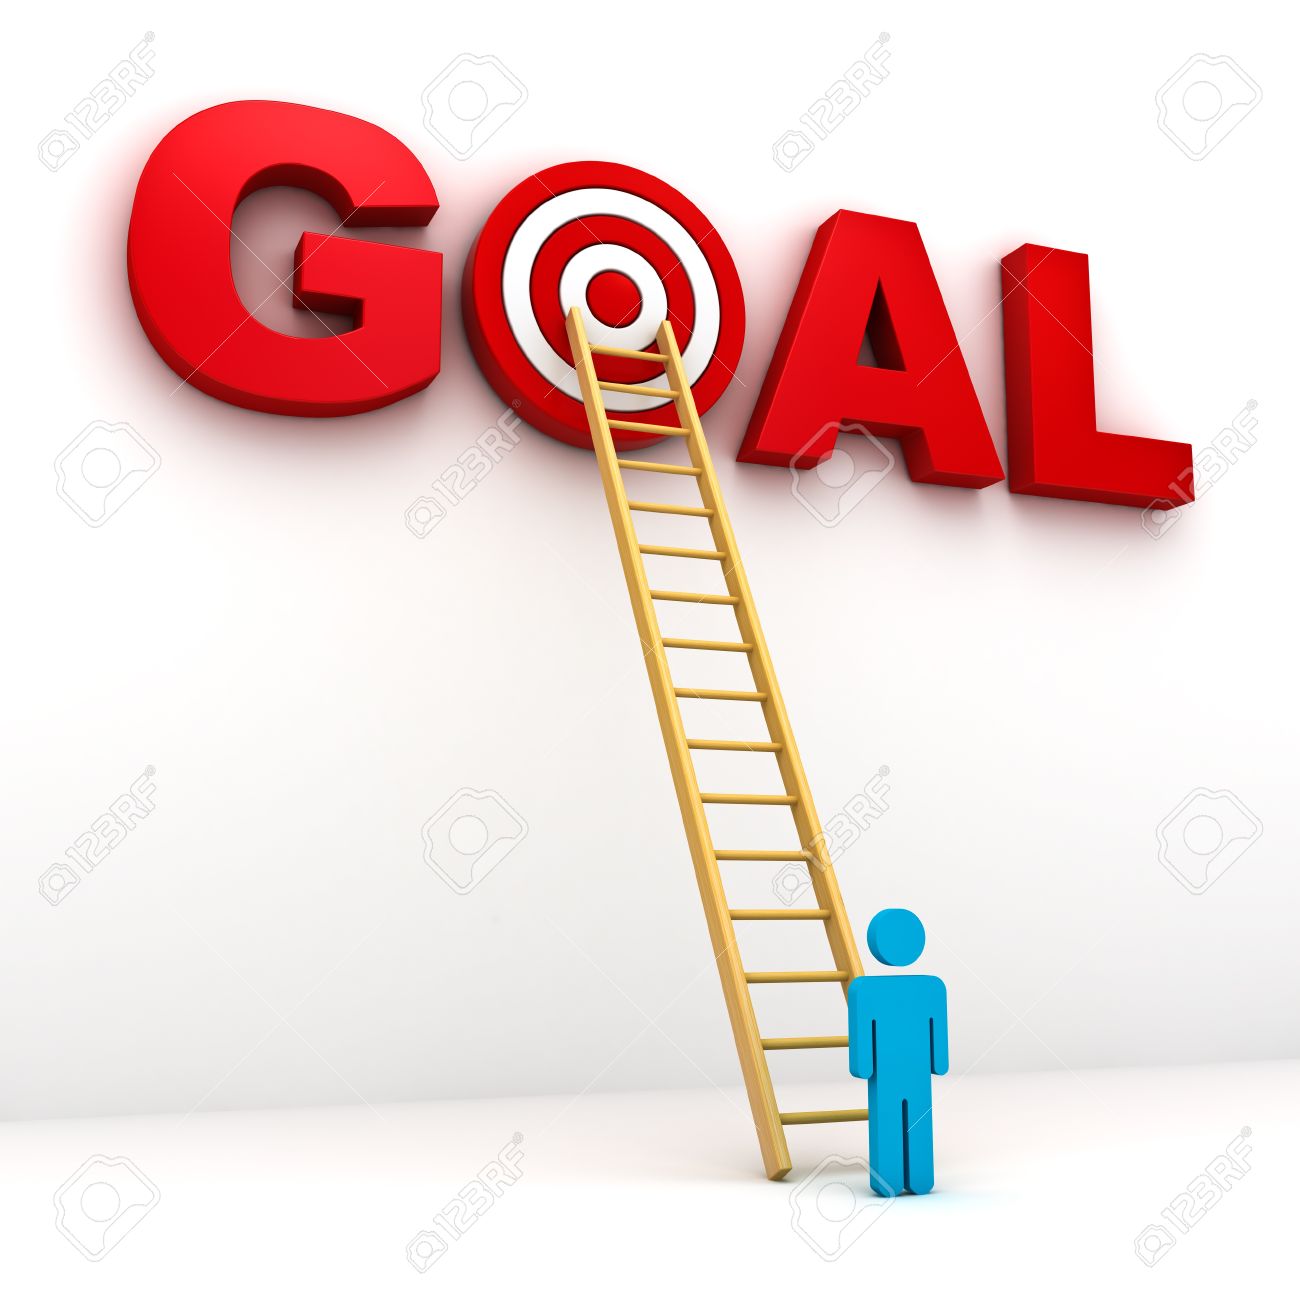 goal clipart - Goal Clip Art